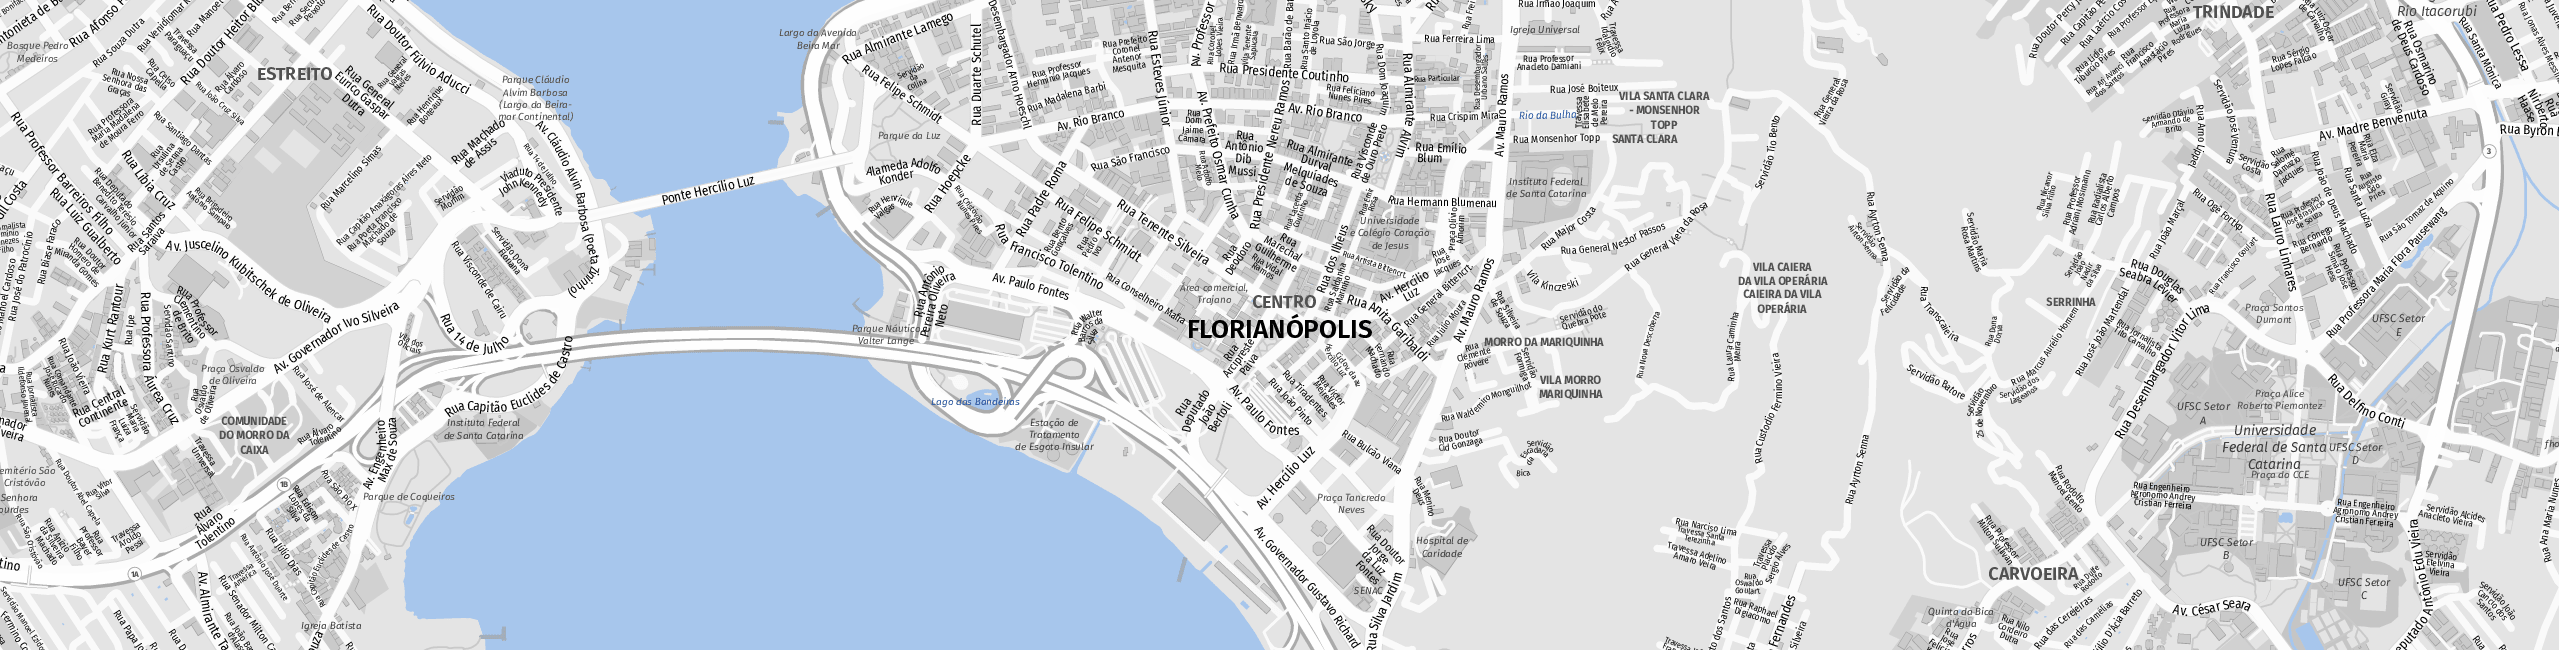 Stadtplan Florianópolis zum Downloaden.